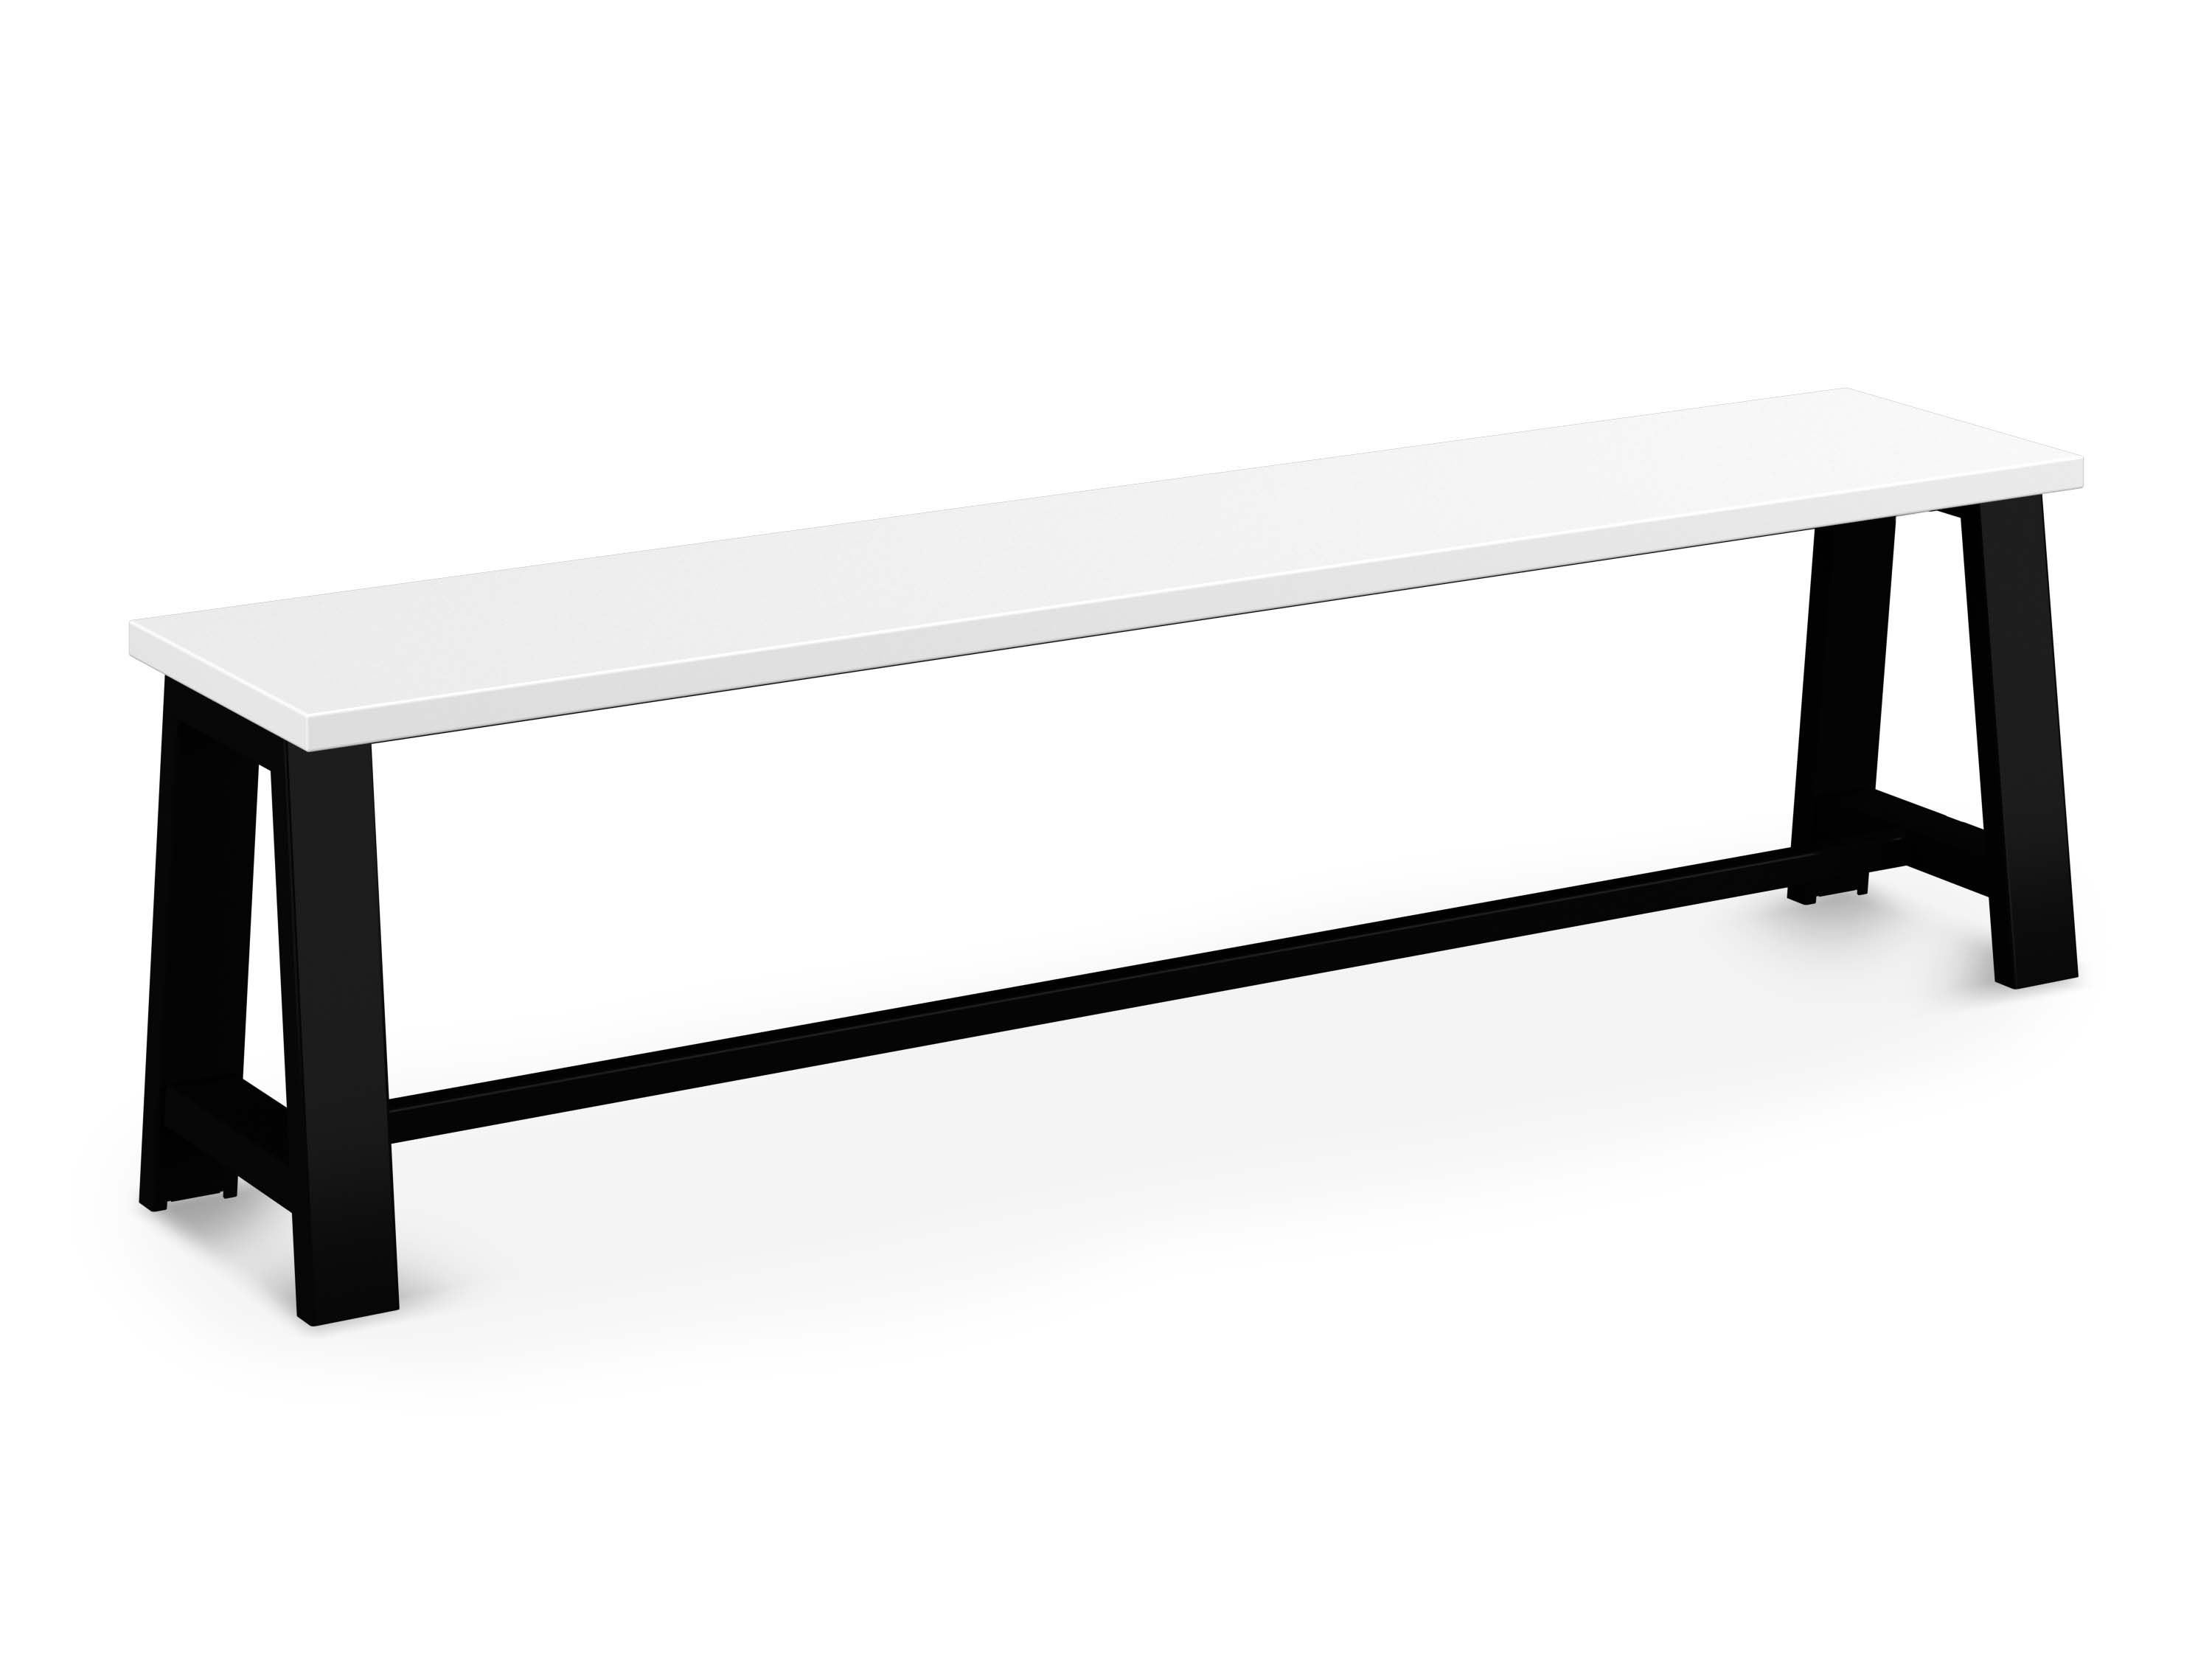 WS - Draft Bench - Black frame, white top